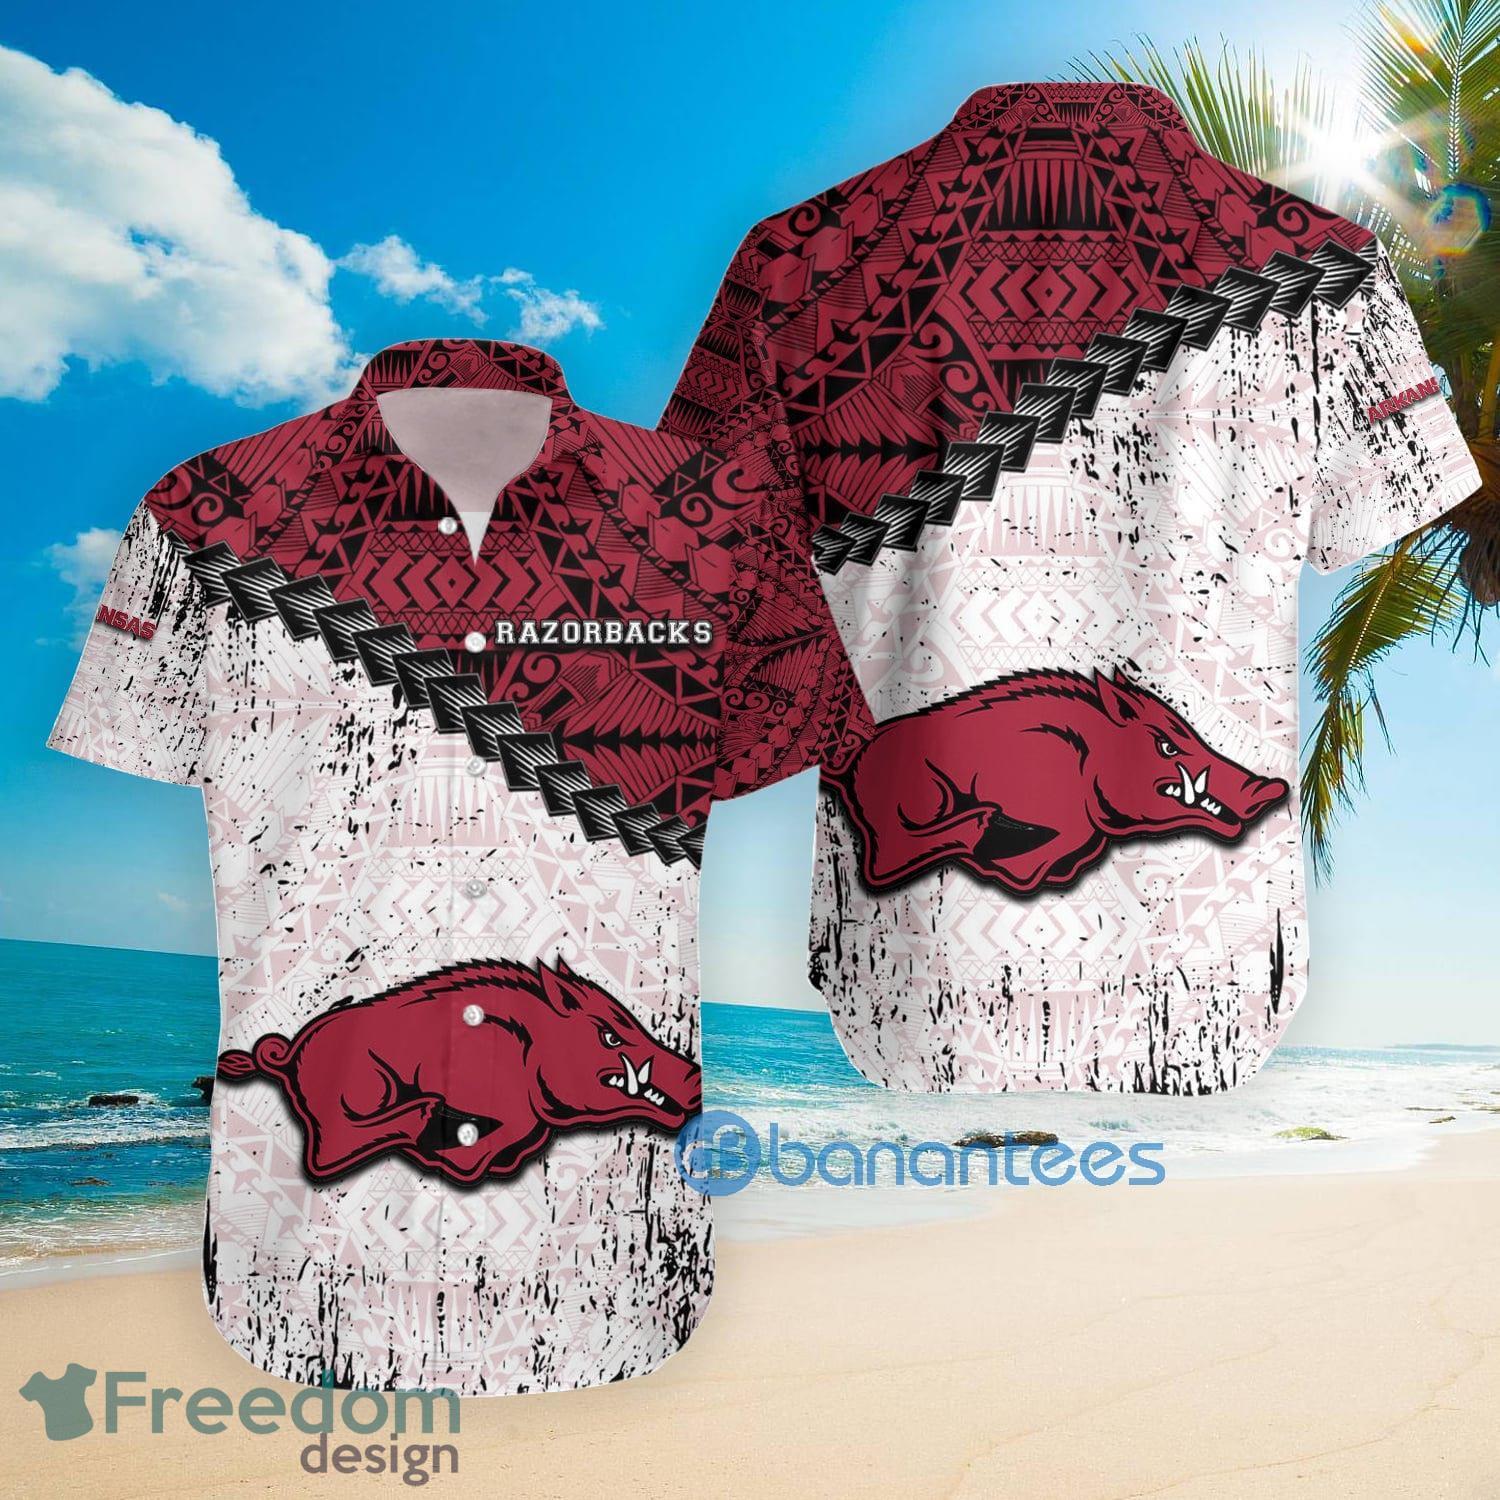 Arkansas Razorbacks NCAA Flower Hawaiian Shirt - Growkoc